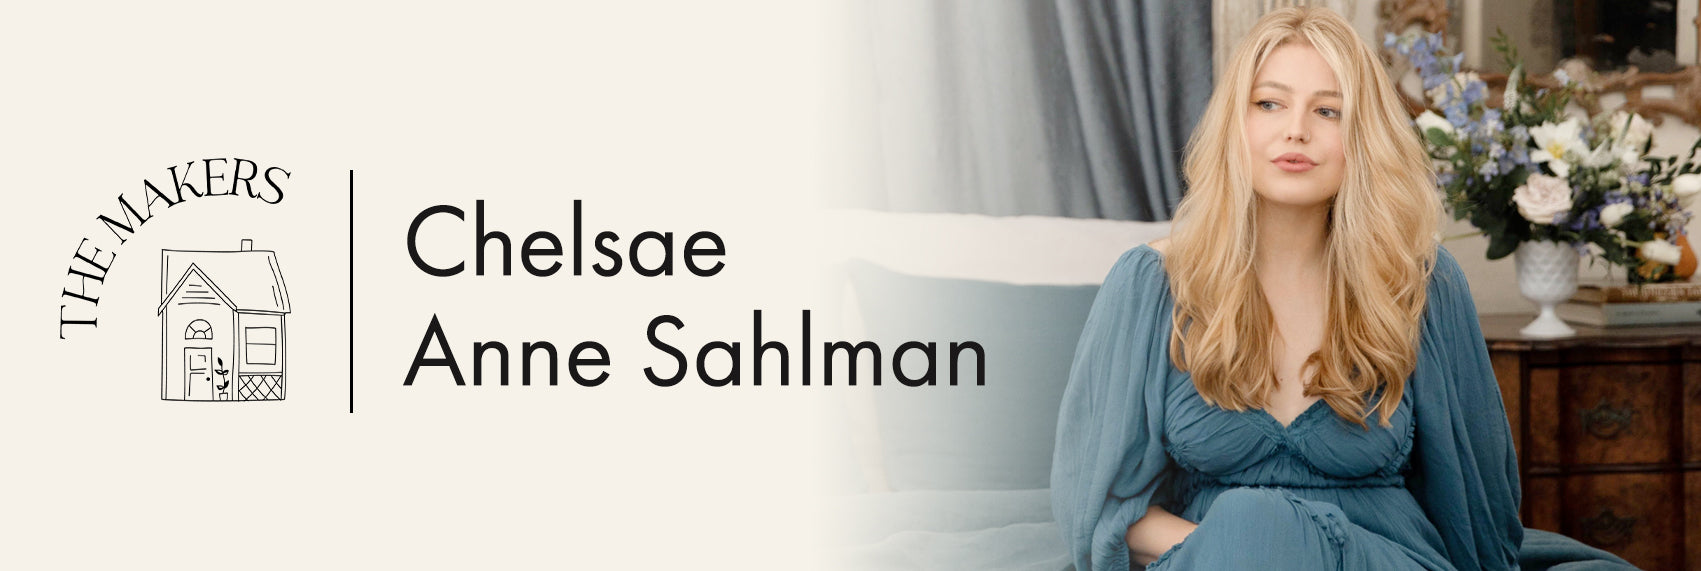 Chelsae Anne Sahlman Edit